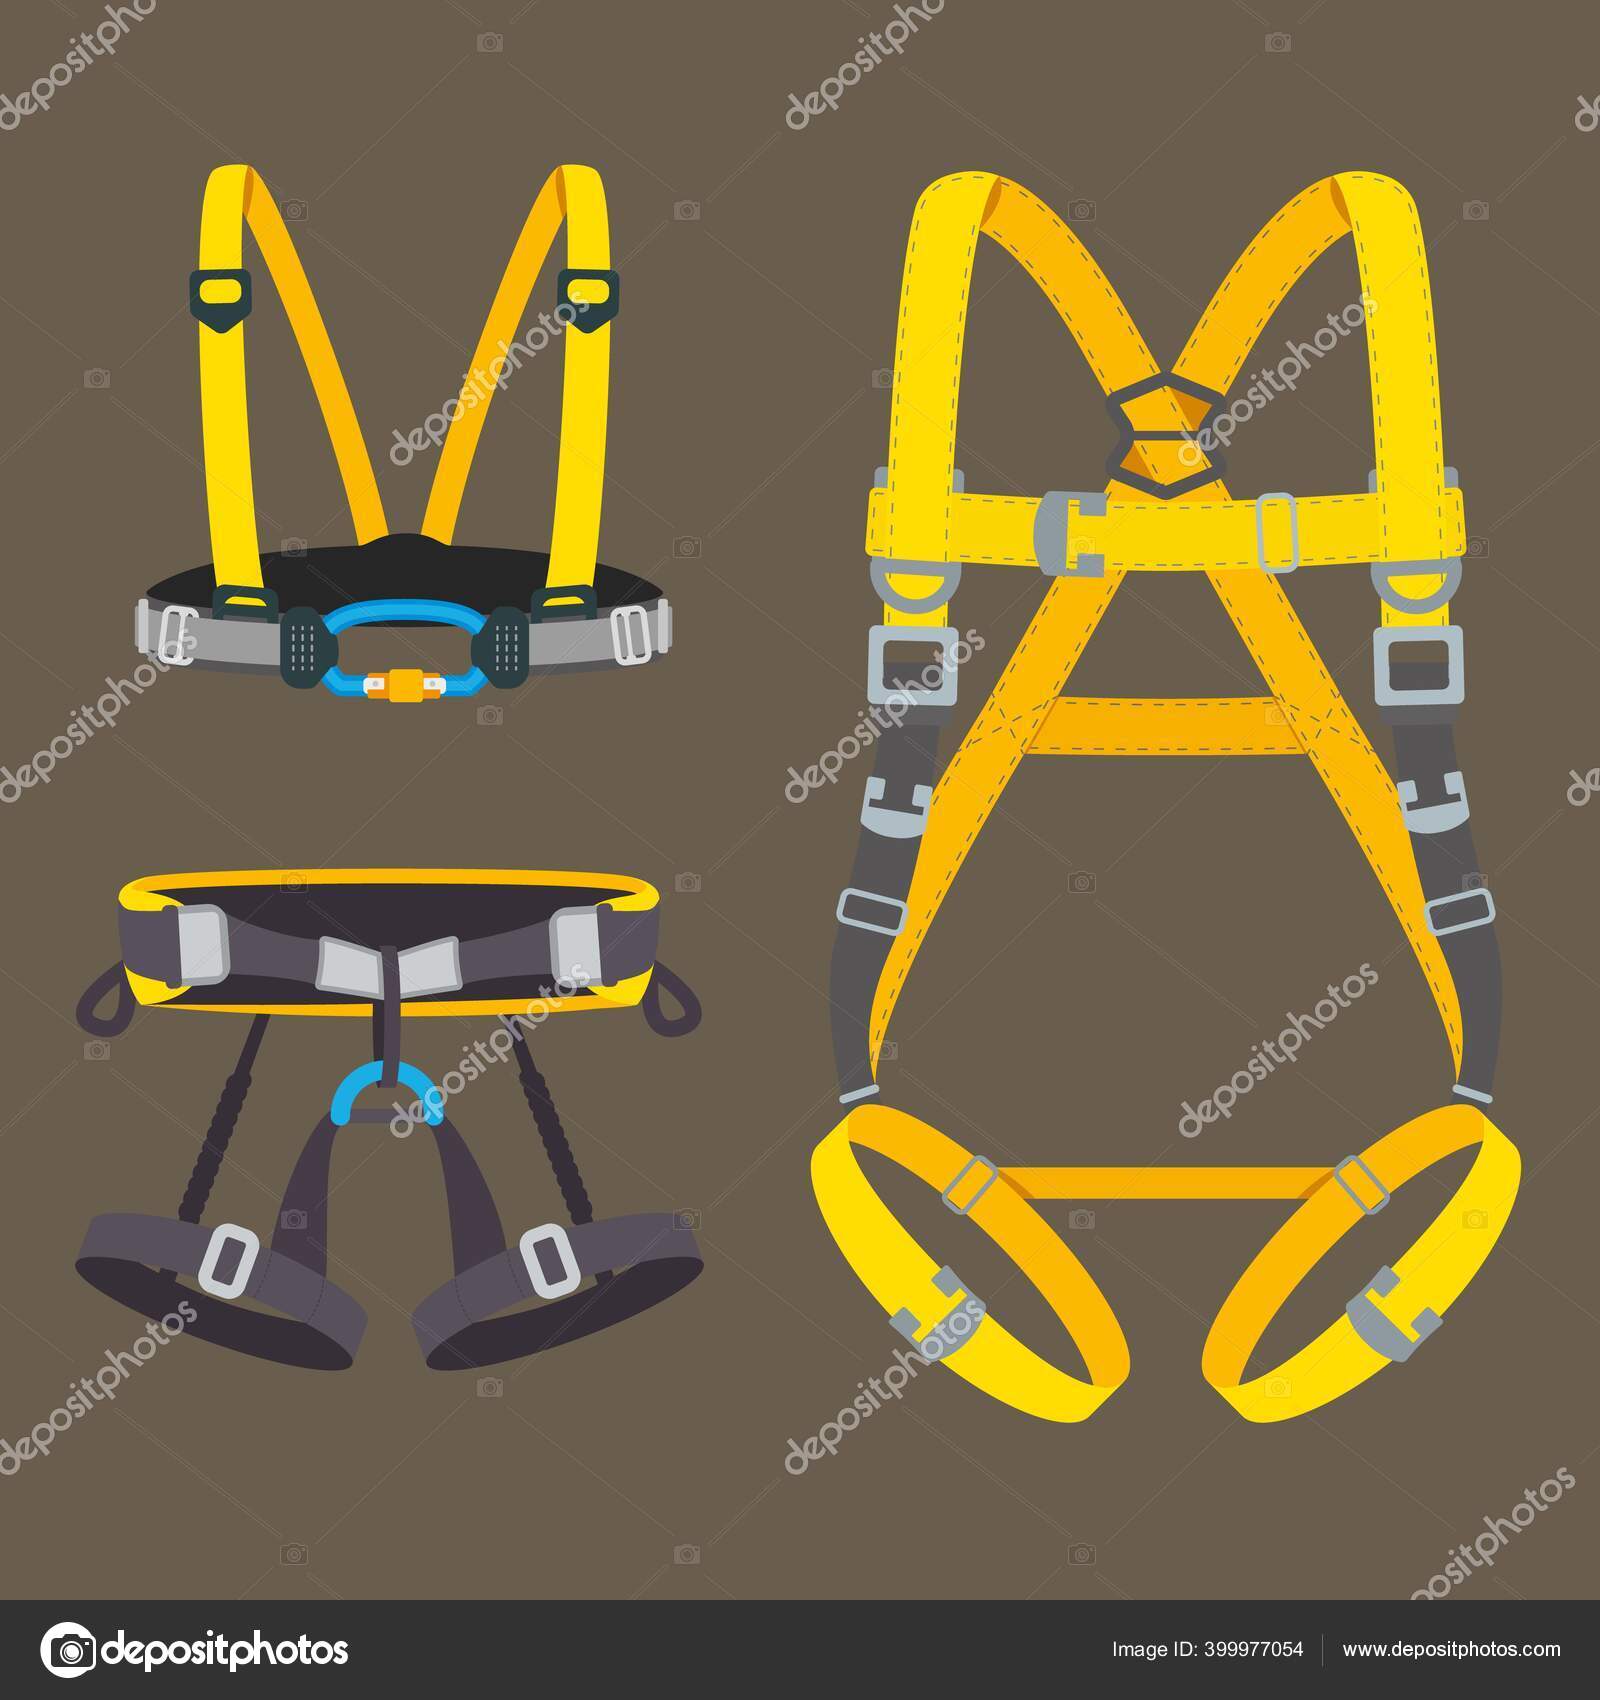 https://st4.depositphotos.com/4331685/39997/v/1600/depositphotos_399977054-stock-illustration-safety-harness-fall-protection-set.jpg